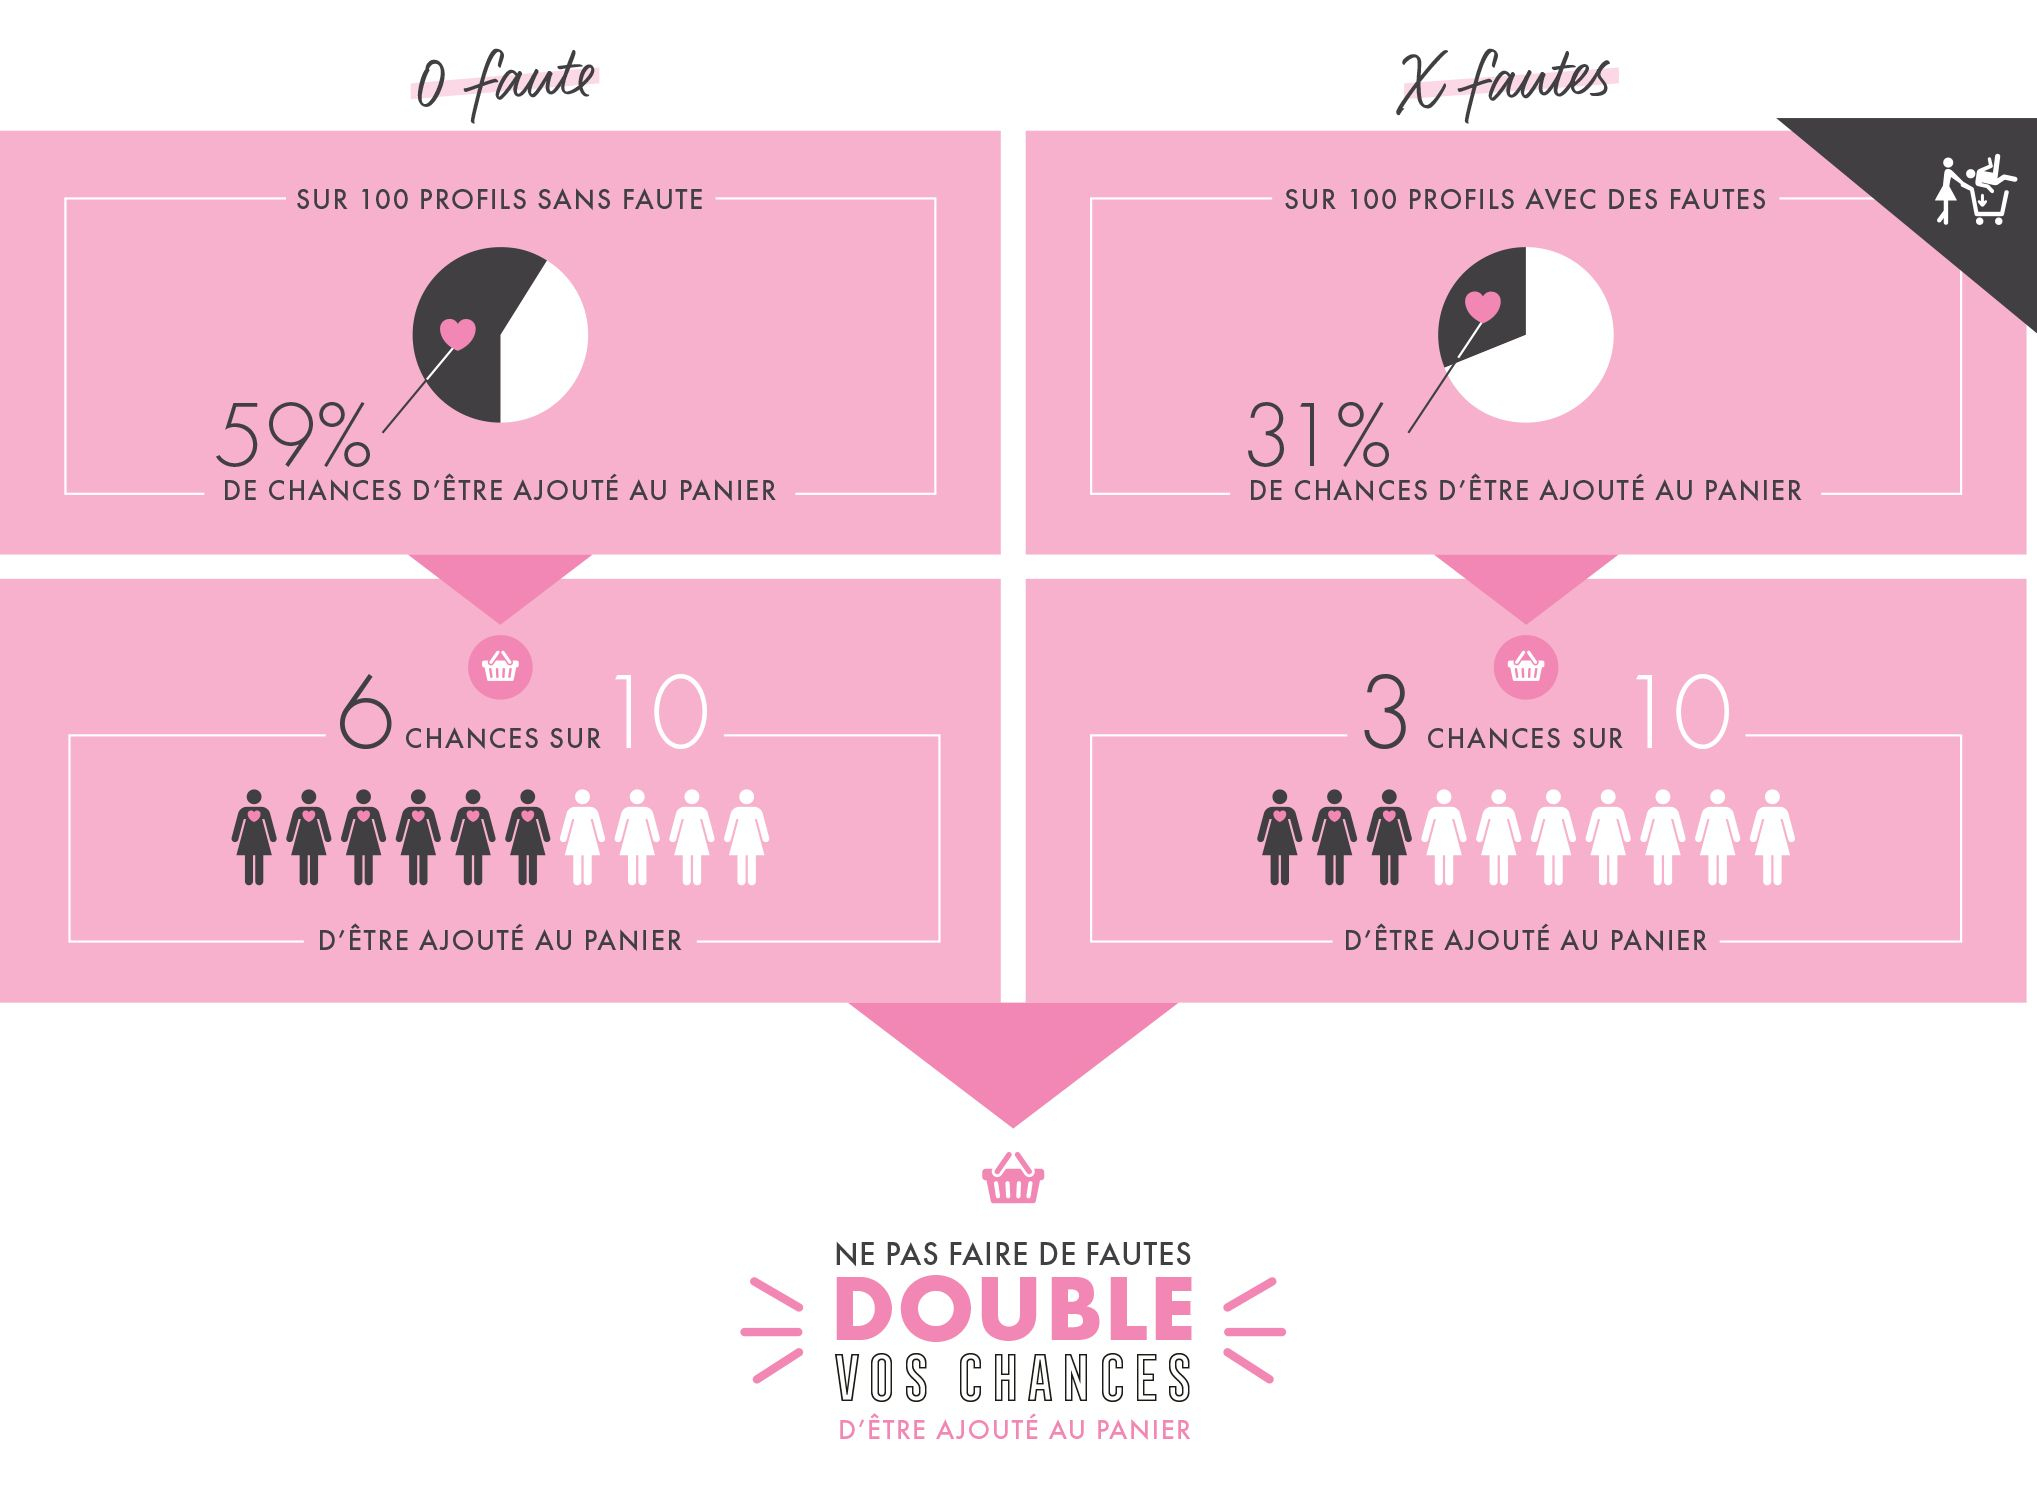 Orthographe #adopteunmec #infographie #dating #rencontre pour Salle De Bain Orthographe